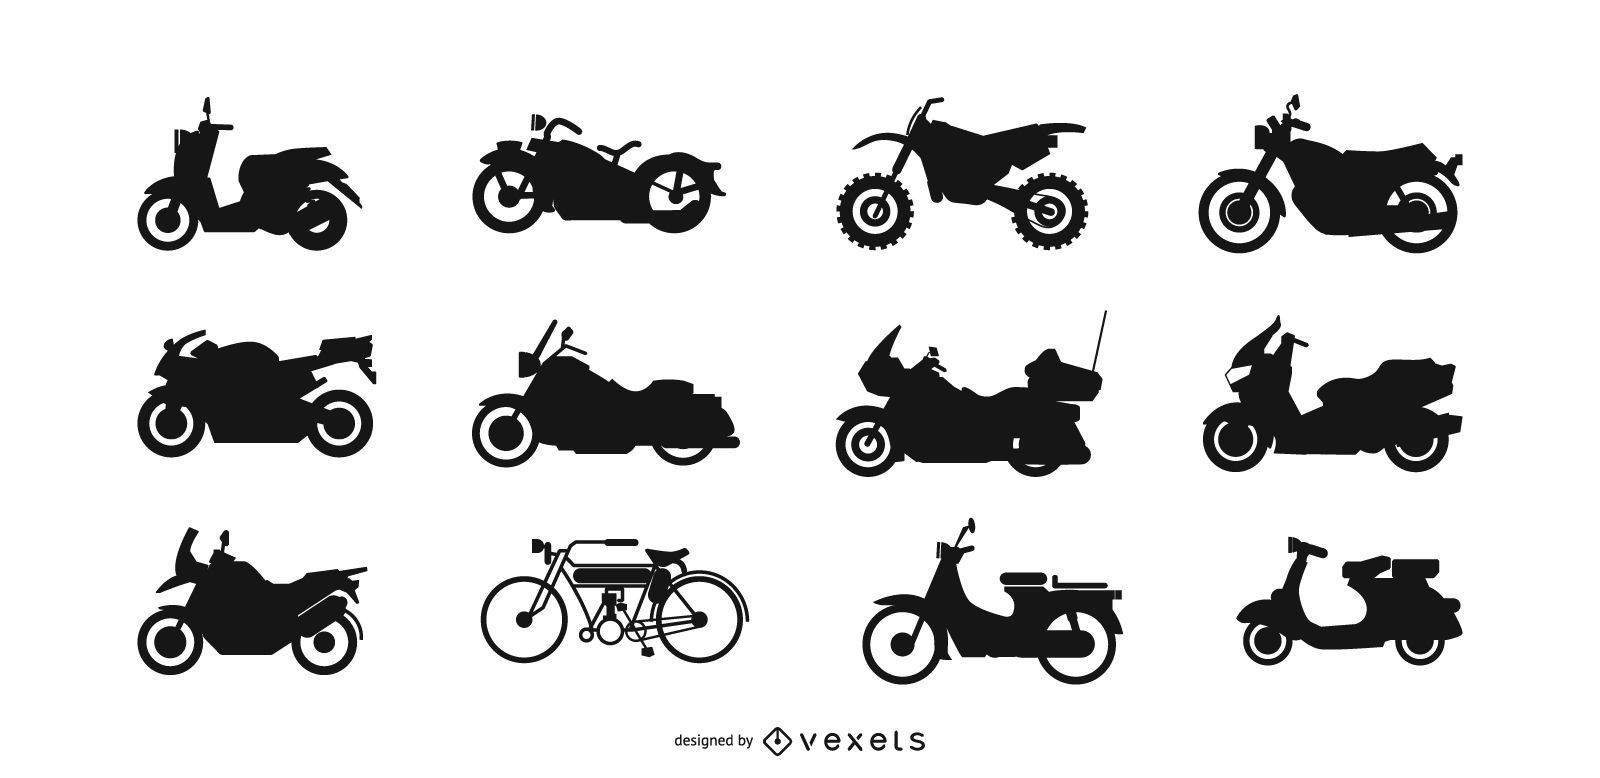 Motorbike silhouette set